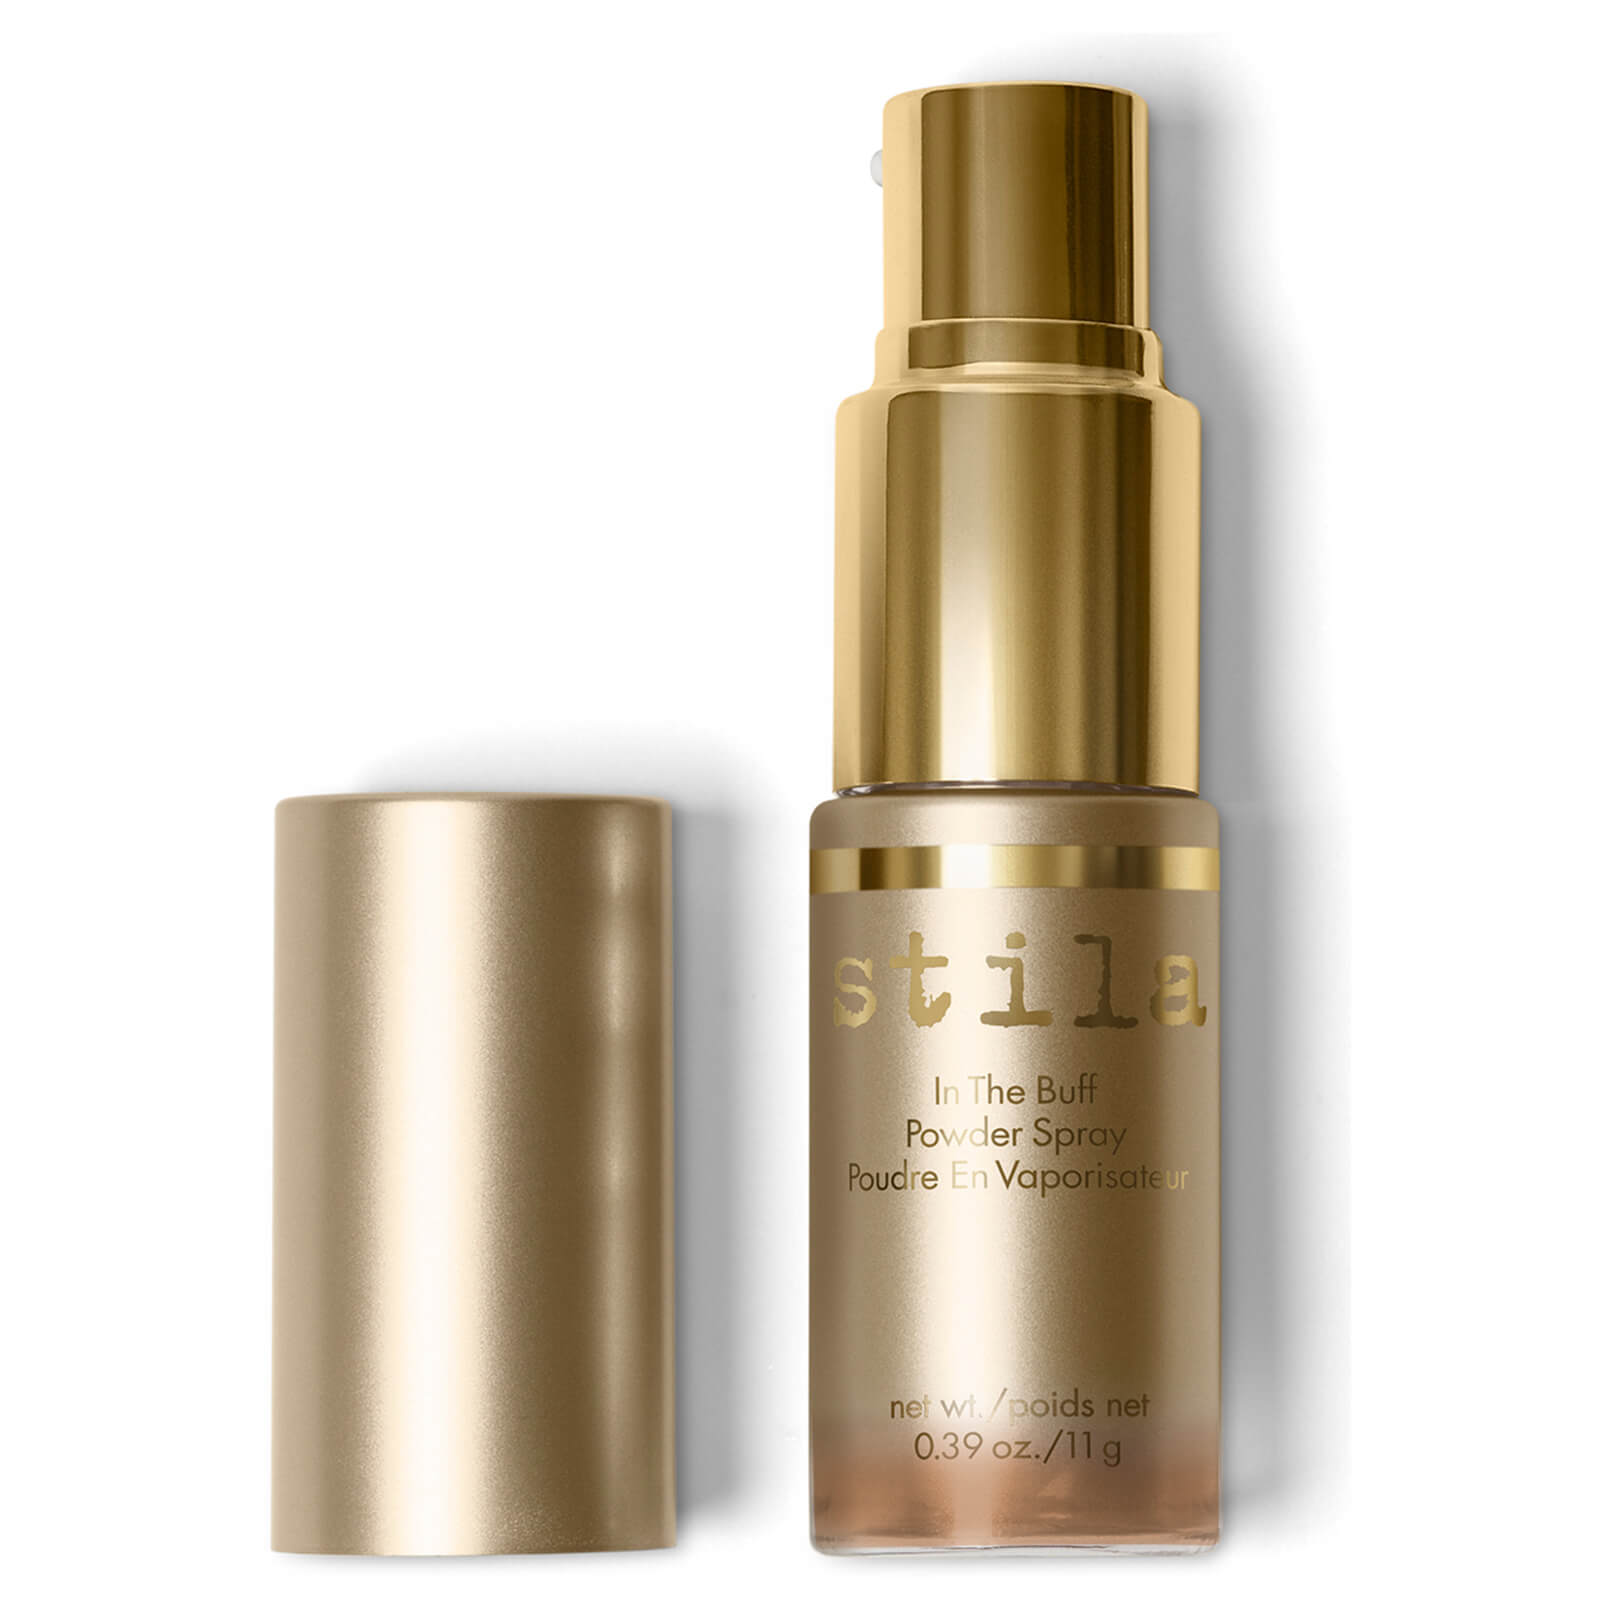 Stila Cosmetics In The Buff Powder Spray 11g - Medium/Deep